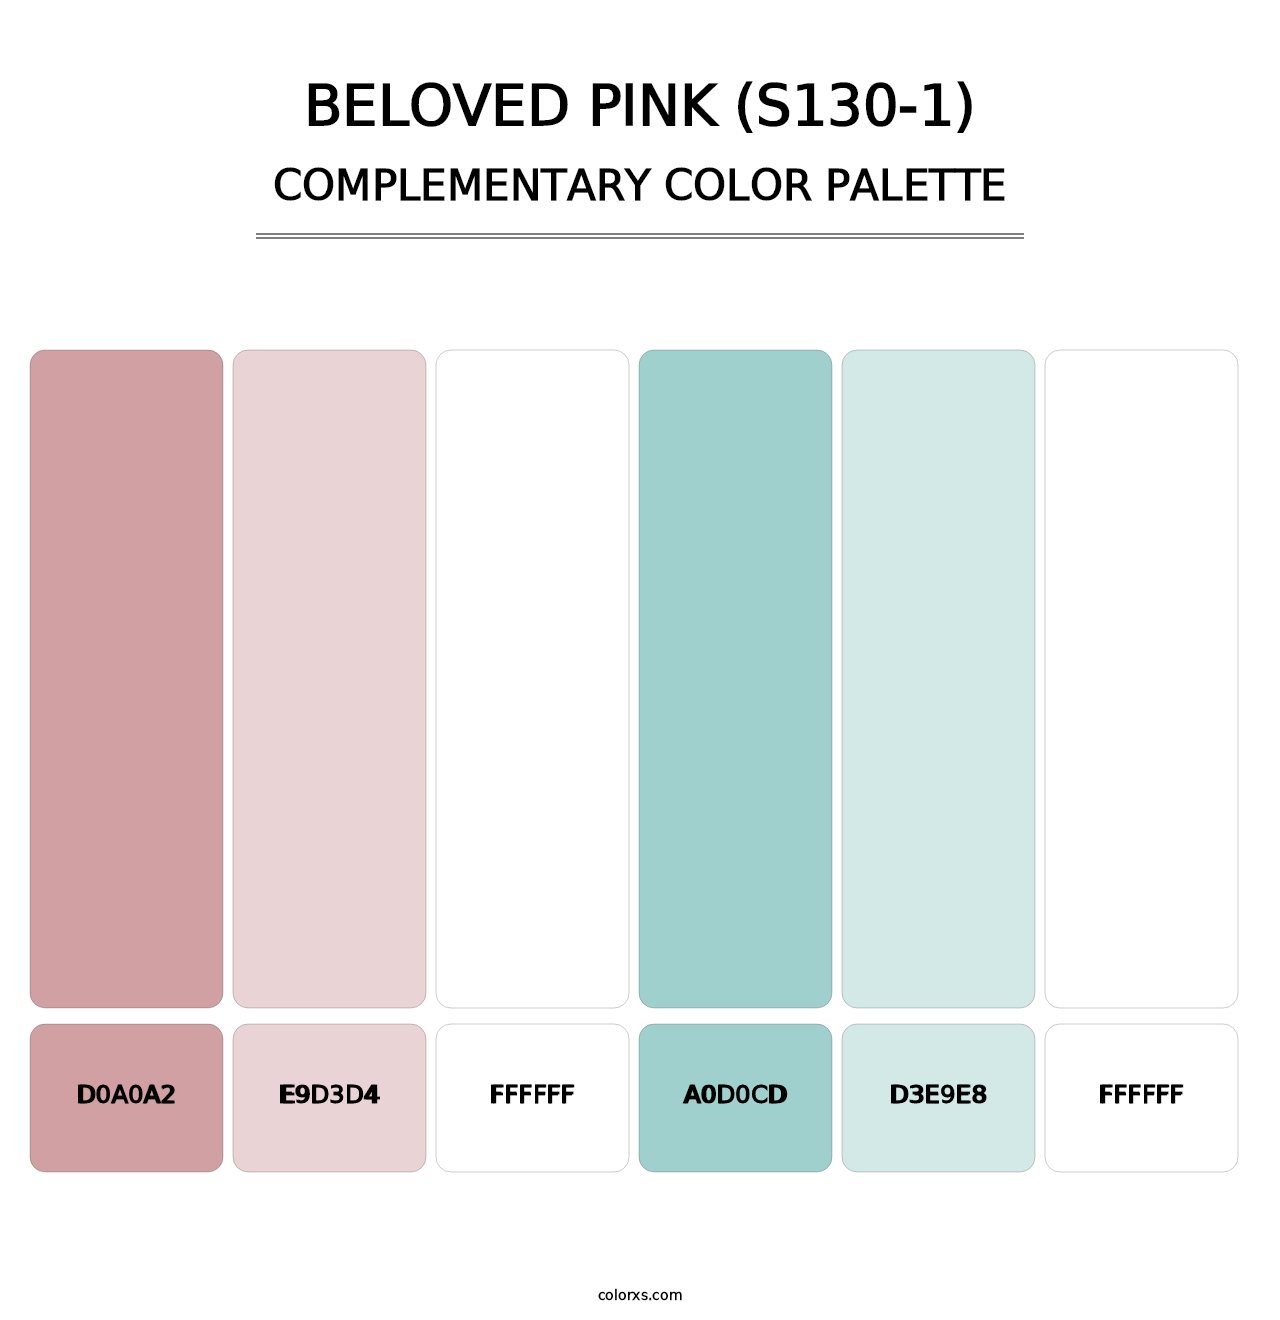 Beloved Pink (S130-1) - Complementary Color Palette